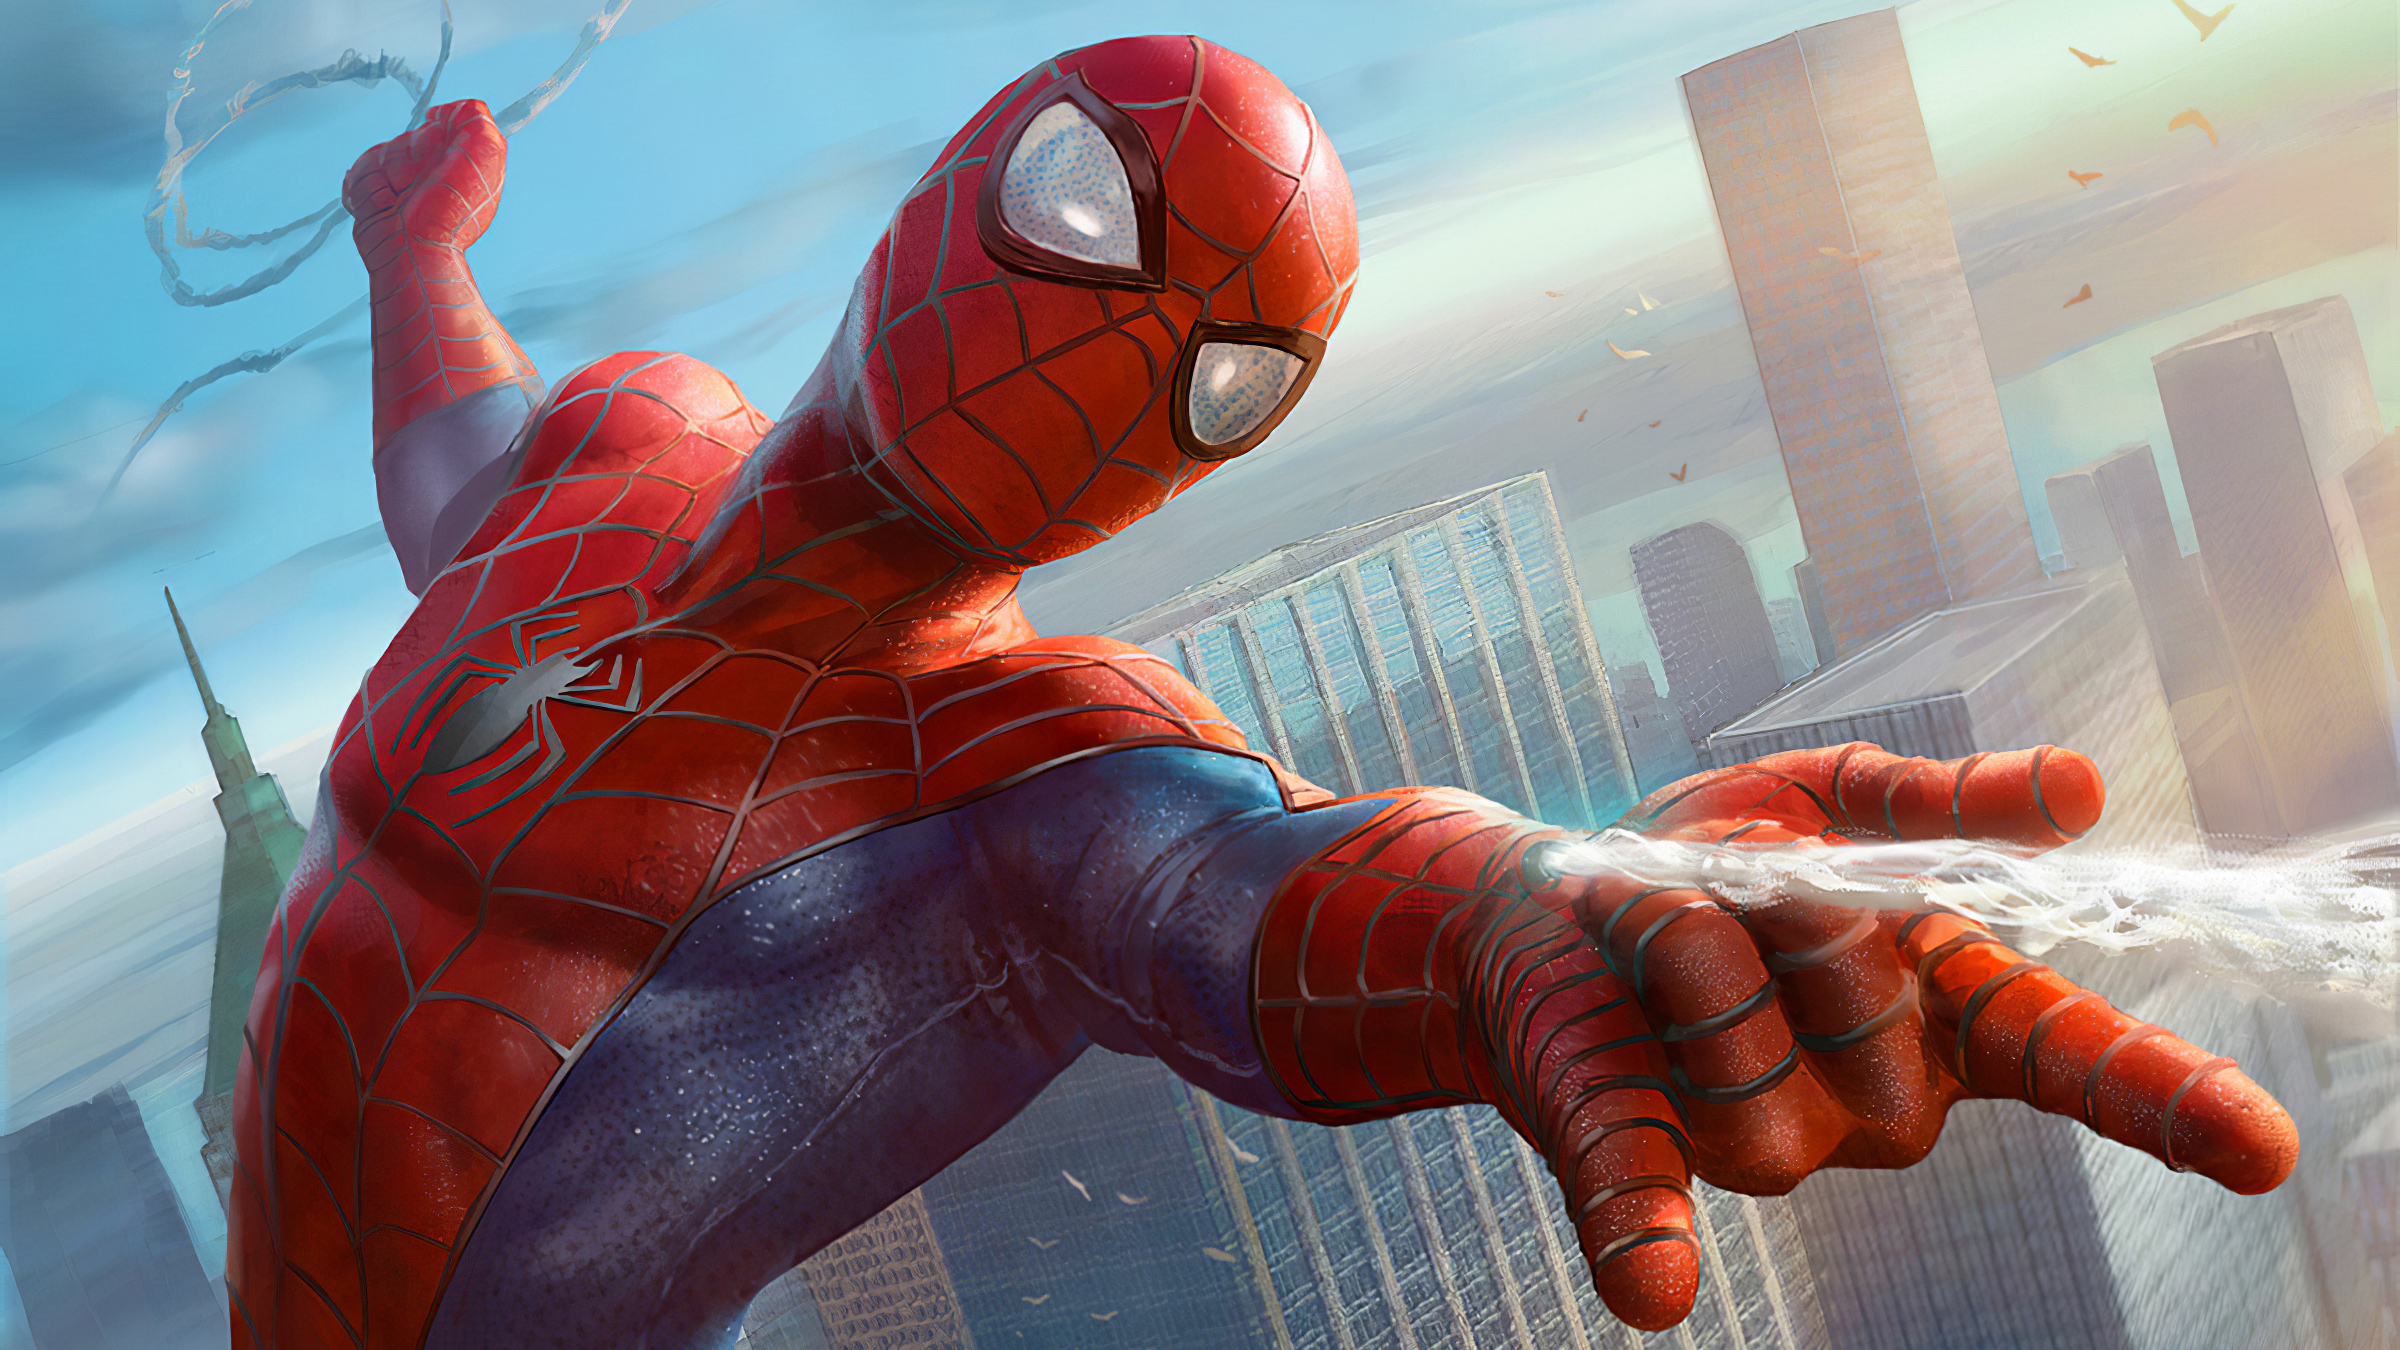 Spider-Man HD Wallpaper by Javier Charro